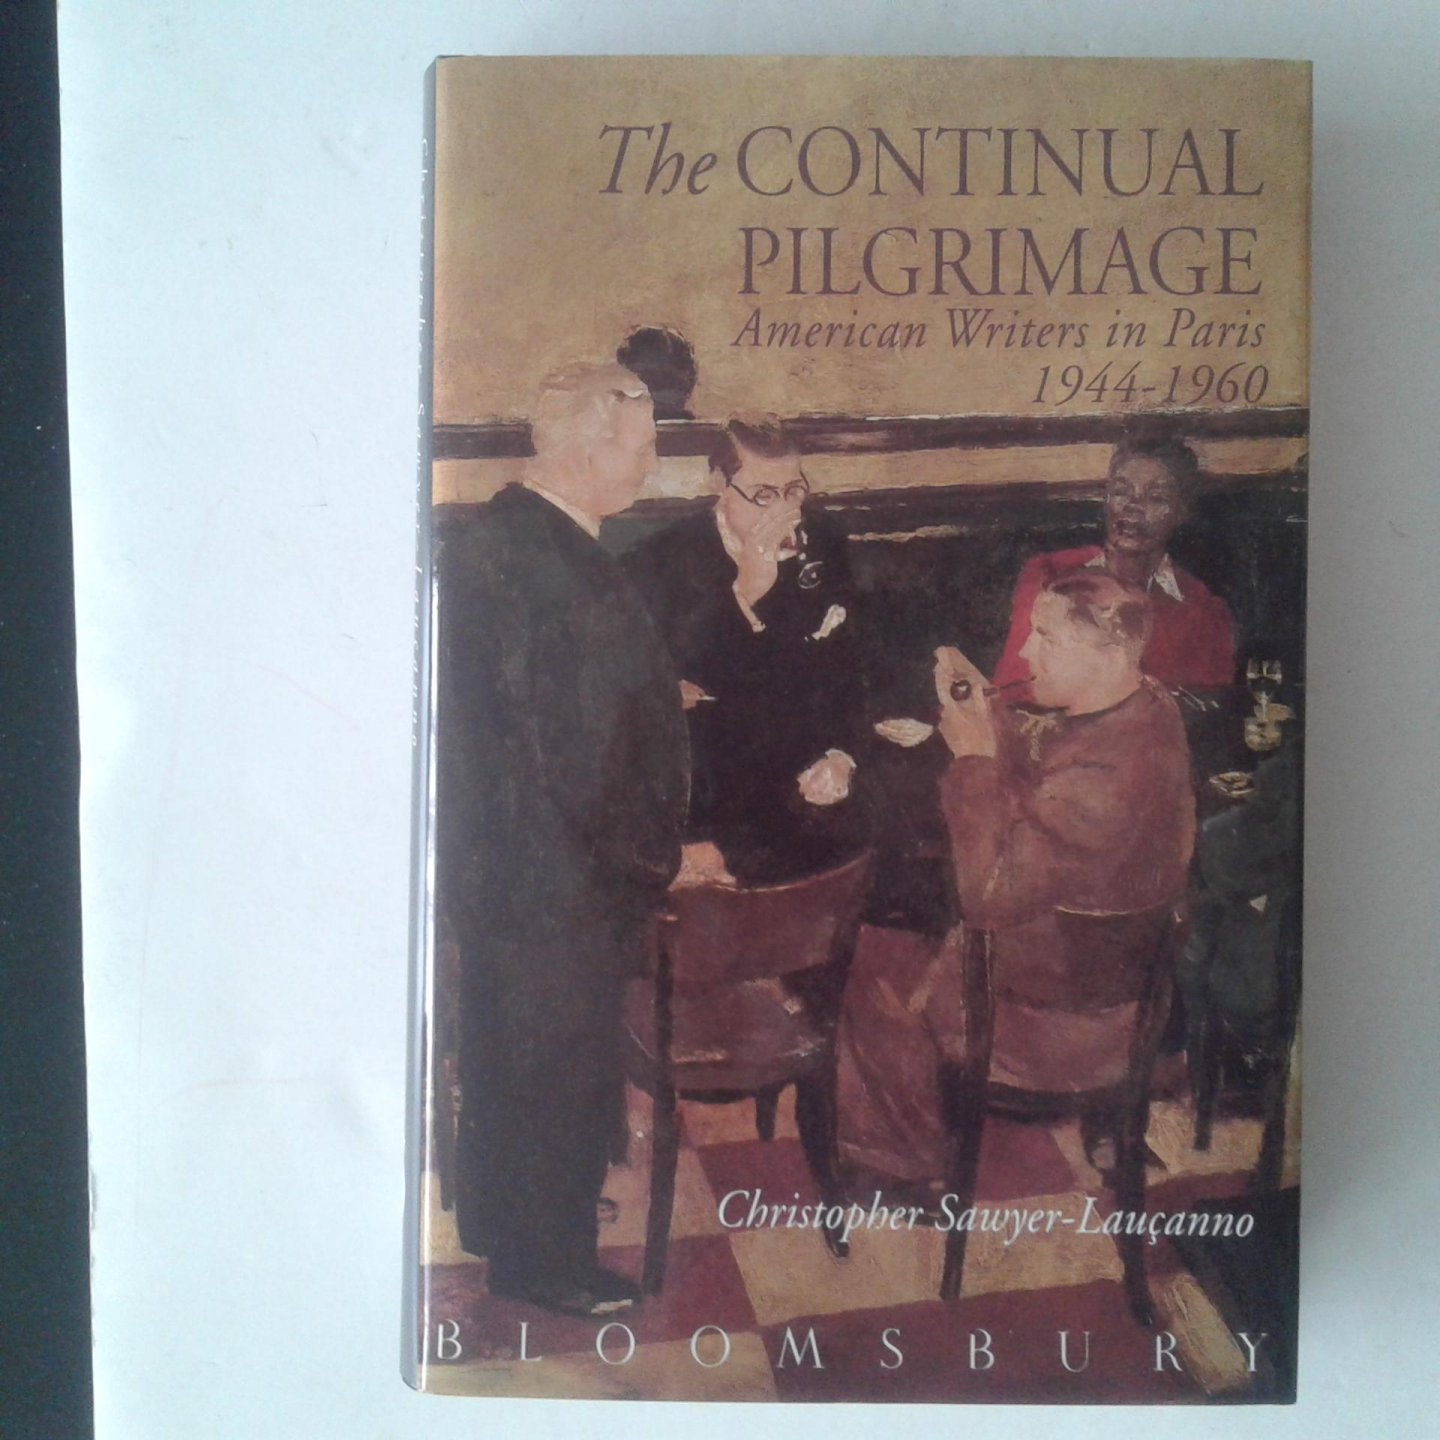 Sawyer-Lauçanno, Christopher - The Continual Pilgrimage ; American Writers in Paris 1944-1960